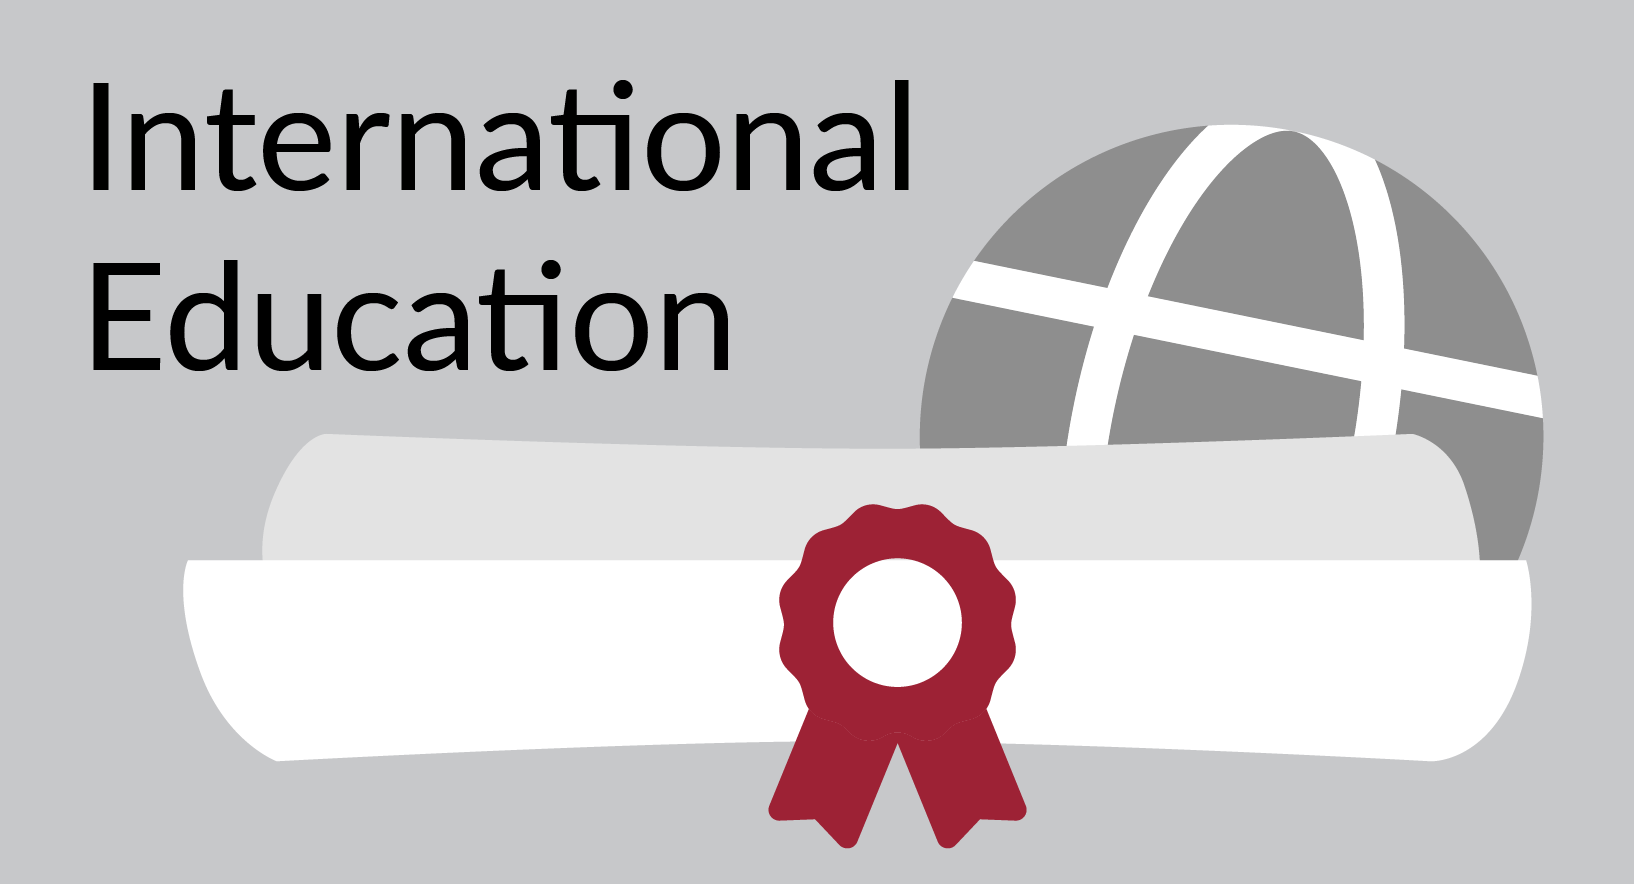 International Education